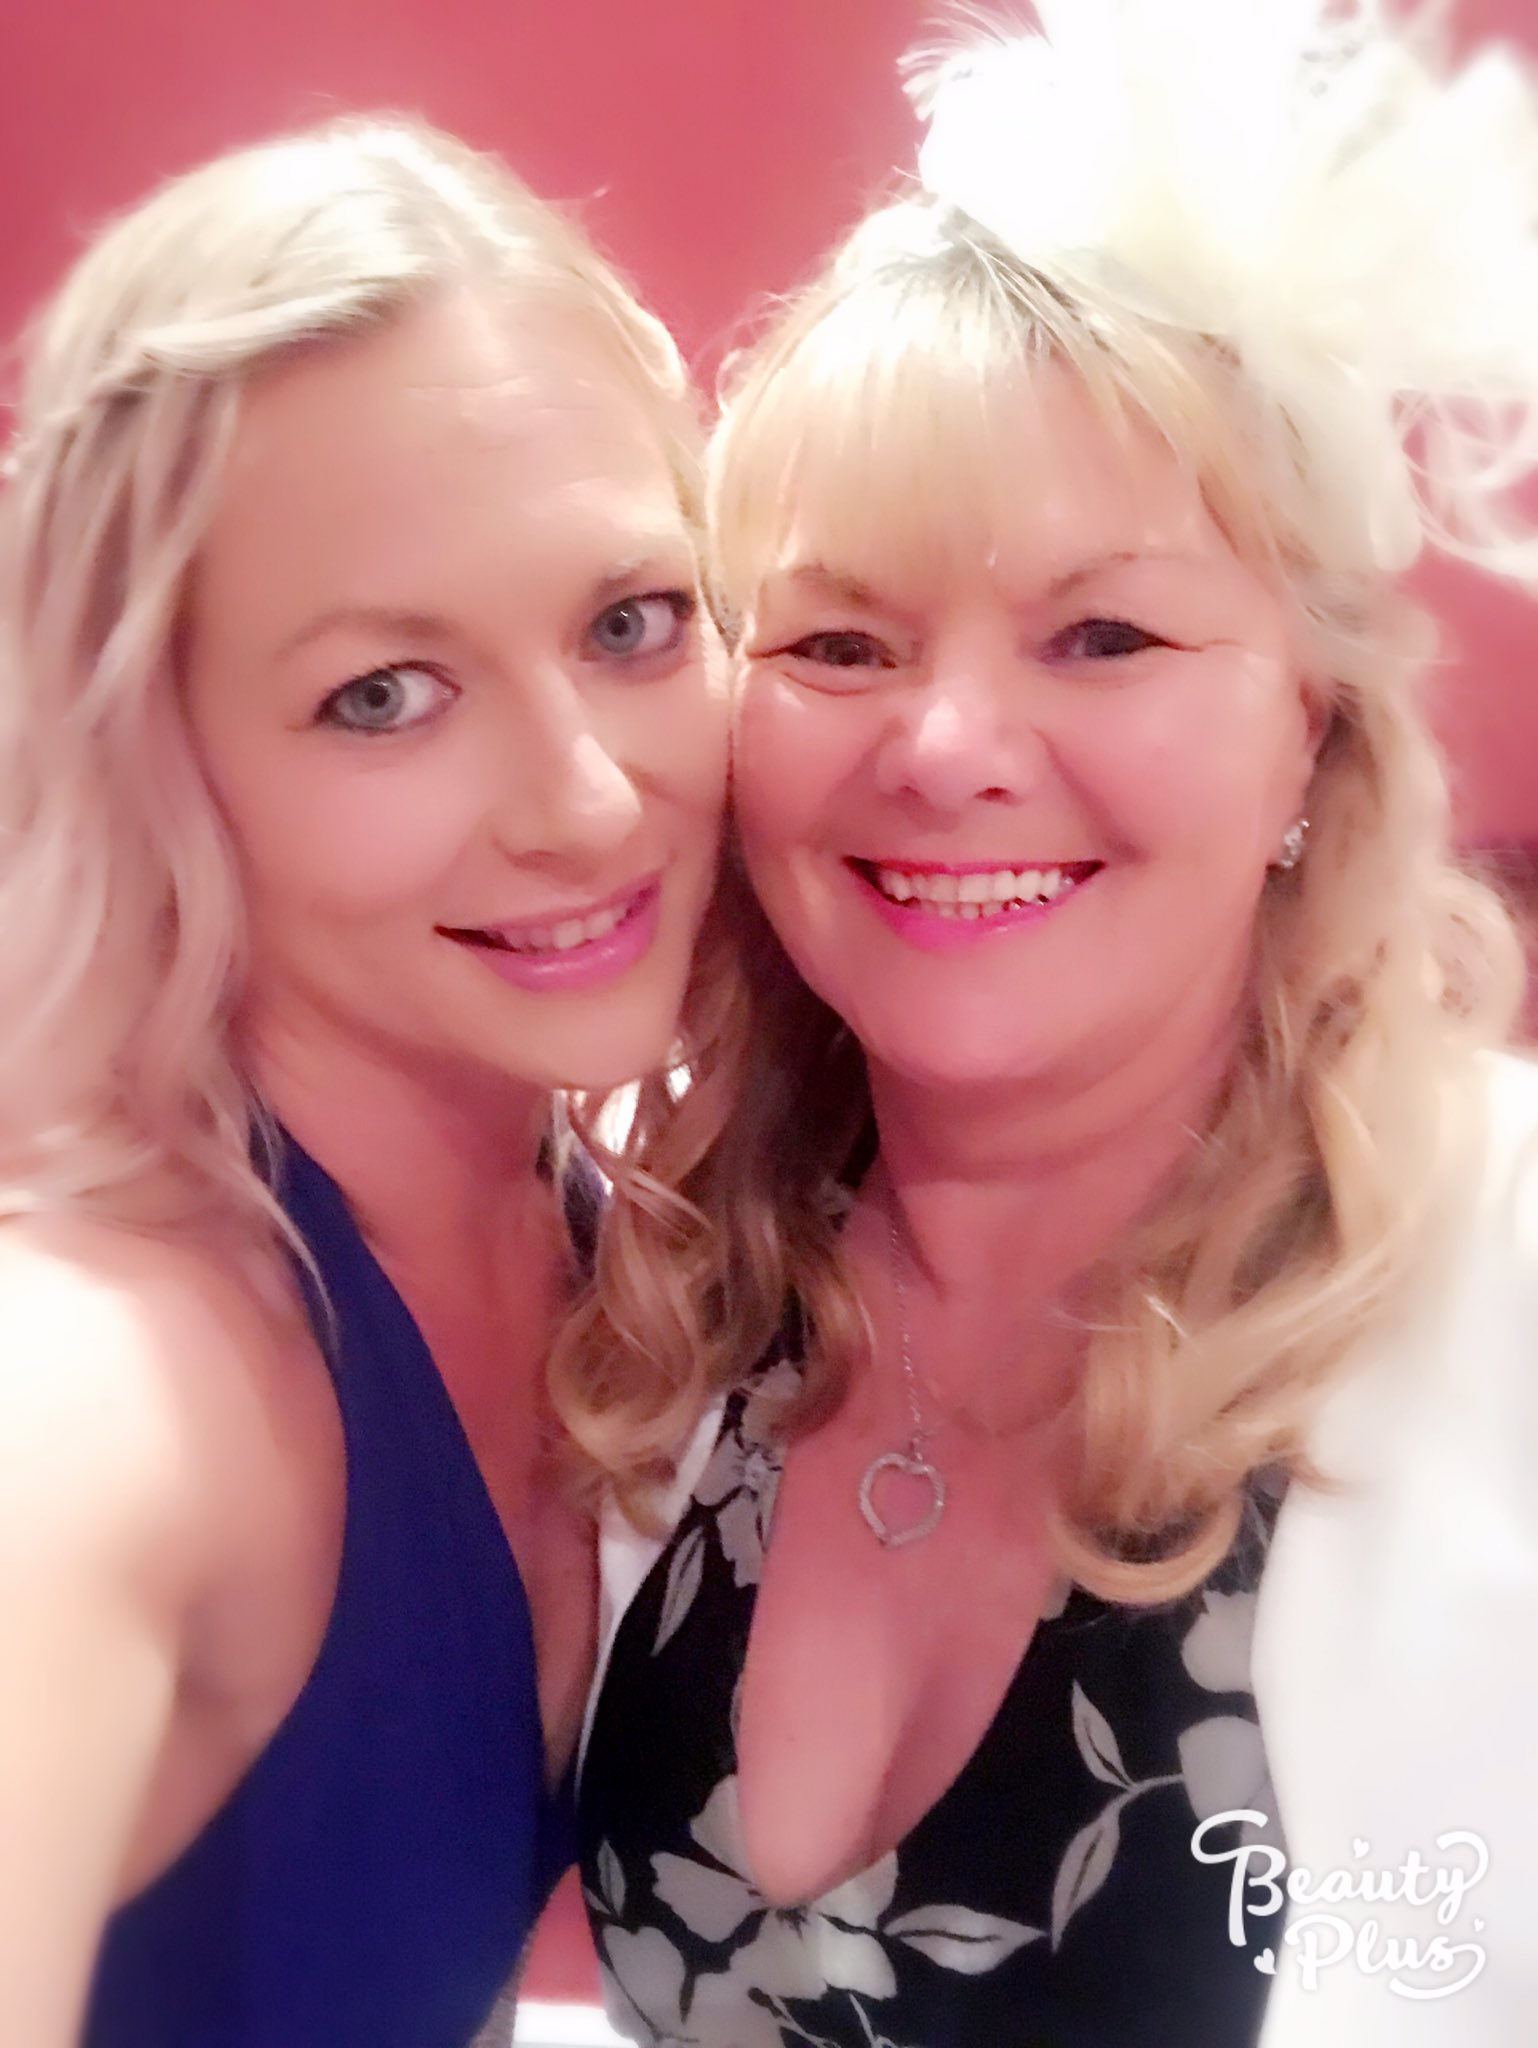 “Mother and daughter #selfie #motheranddaughter” .